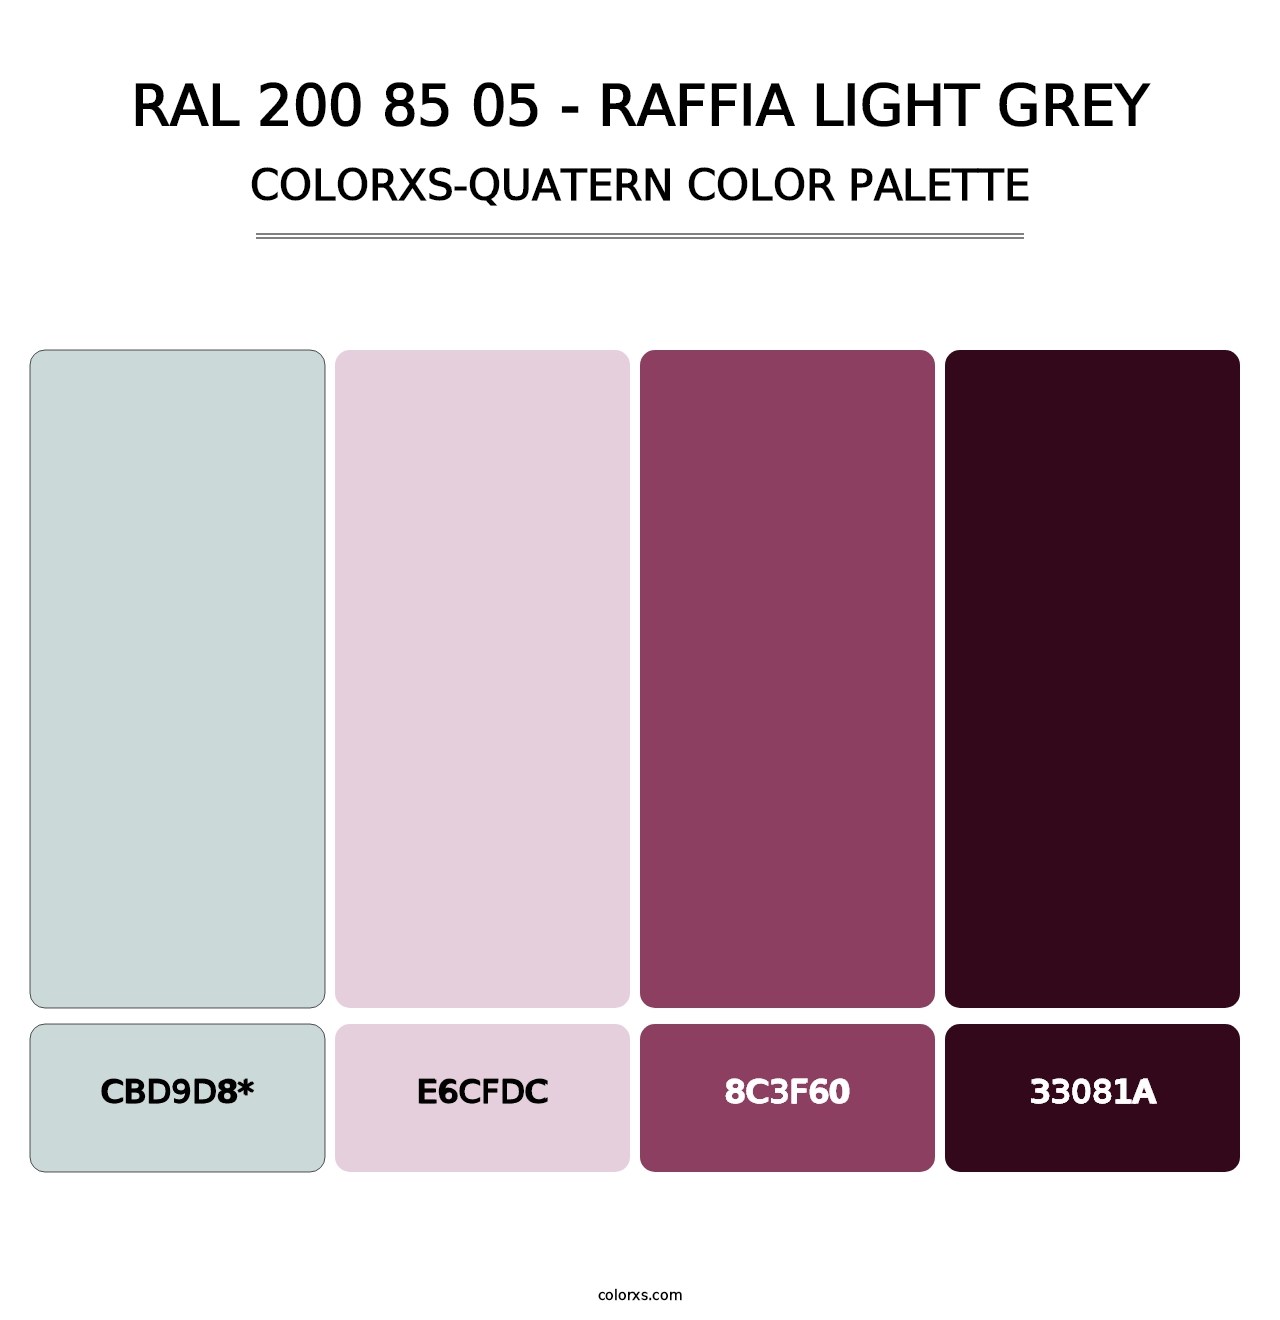 RAL 200 85 05 - Raffia Light Grey - Colorxs Quatern Palette